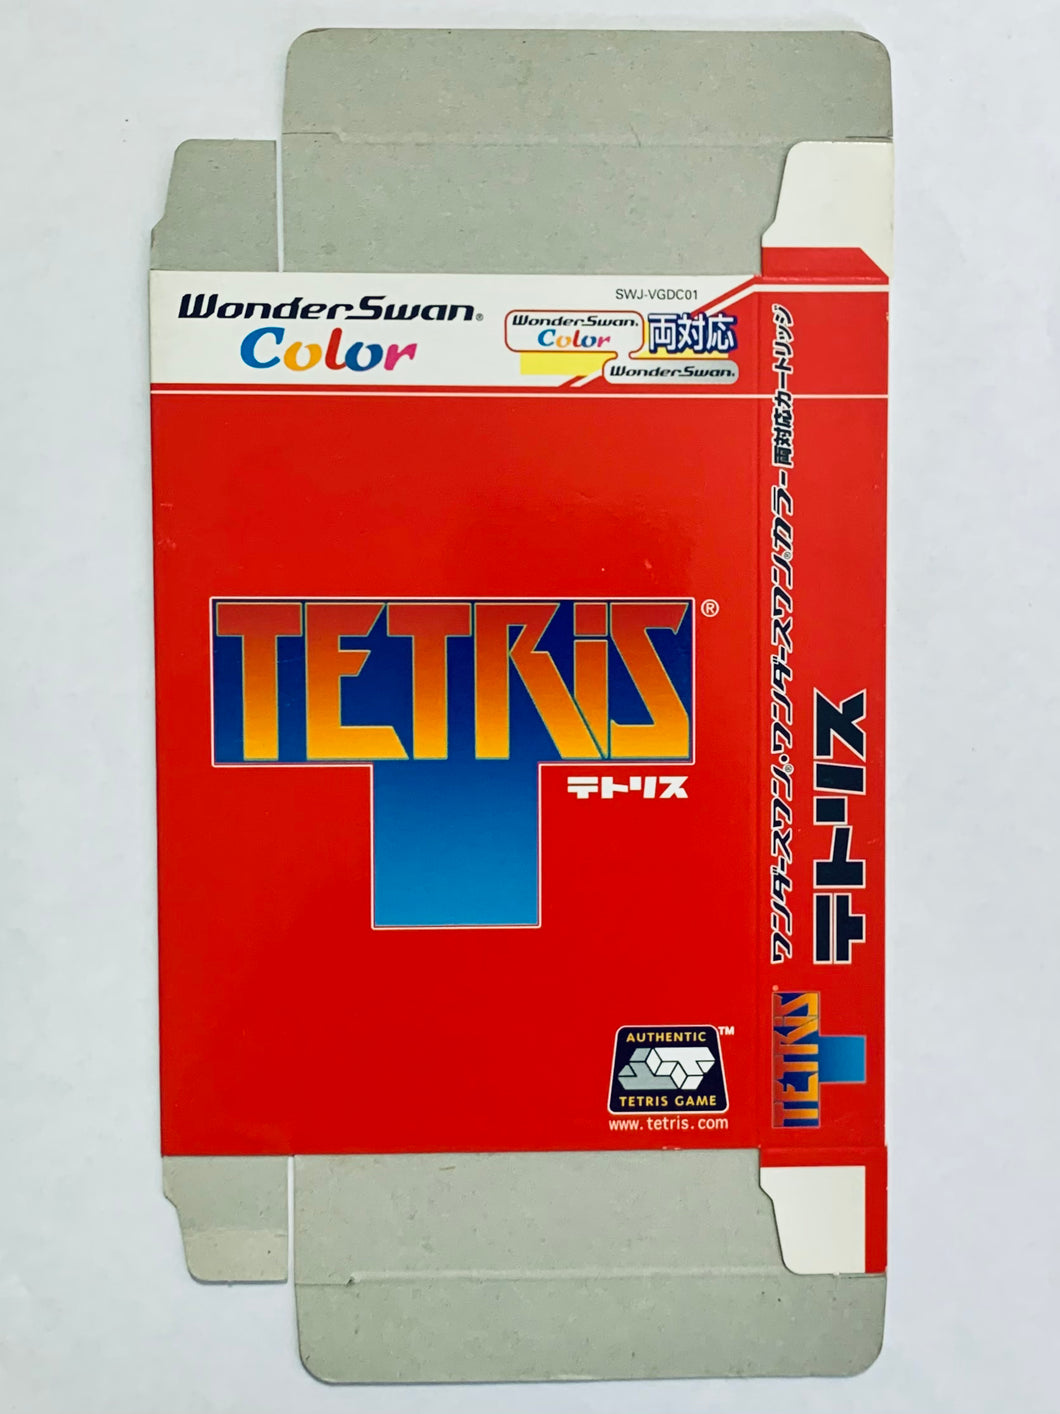 Tetris - WonderSwan Color - WSC - JP - Box Only (SWJ-VGDC01)